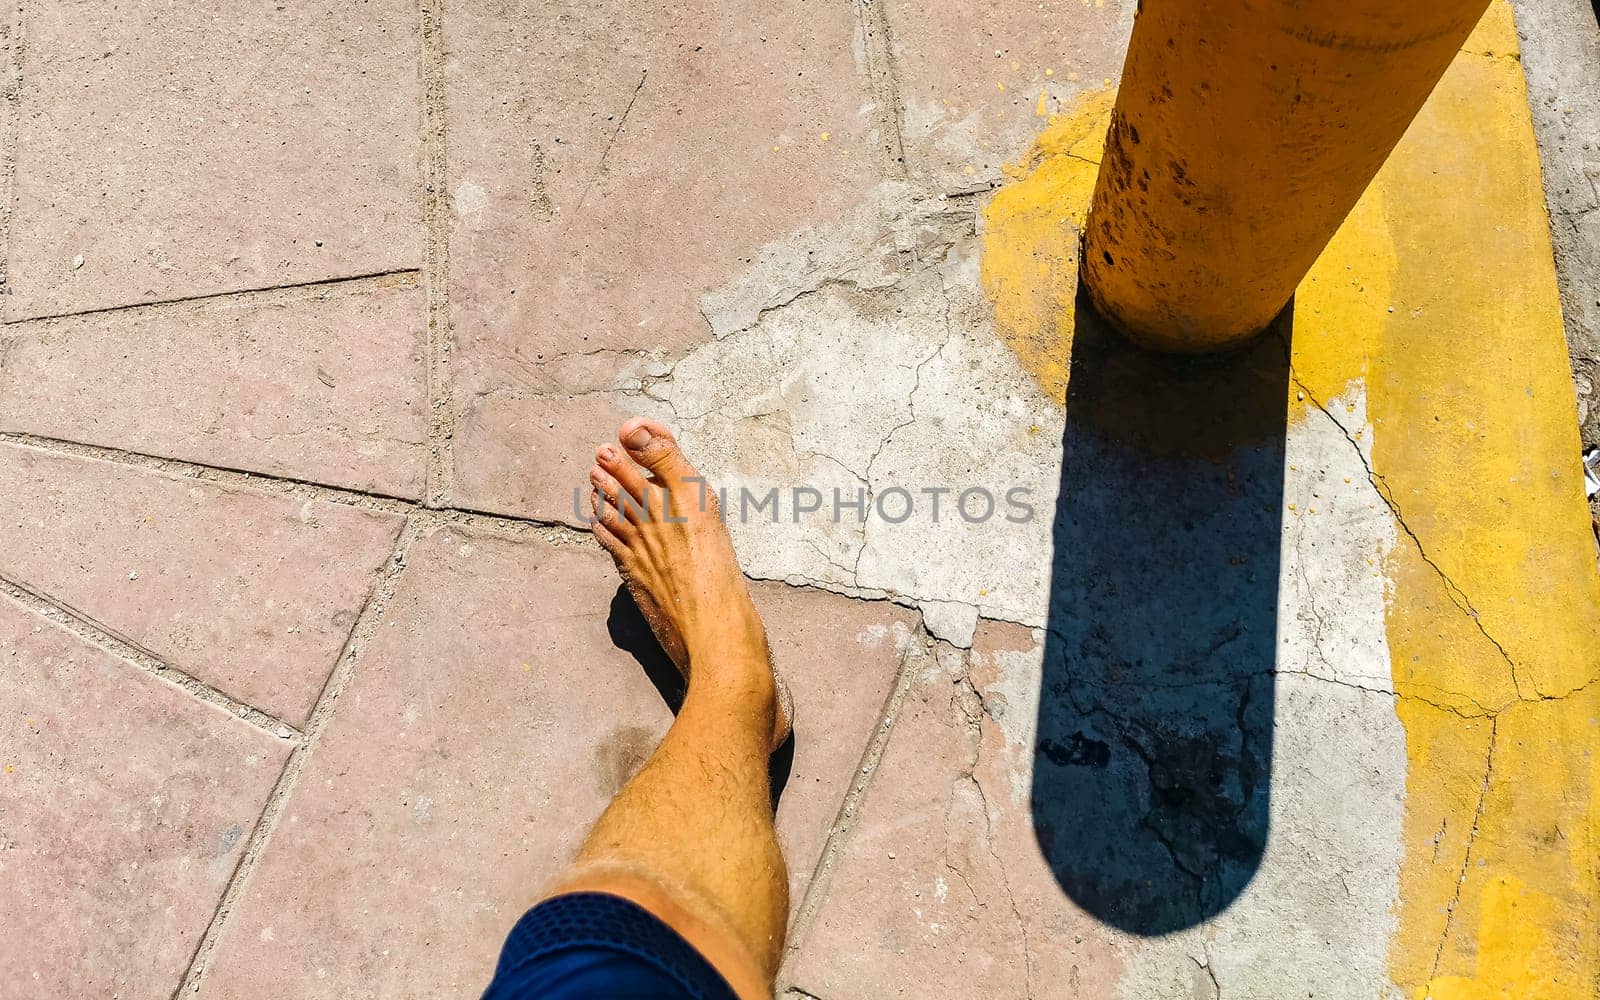 Walking on the pavement rocks stones feet barefoot in Mexico. by Arkadij